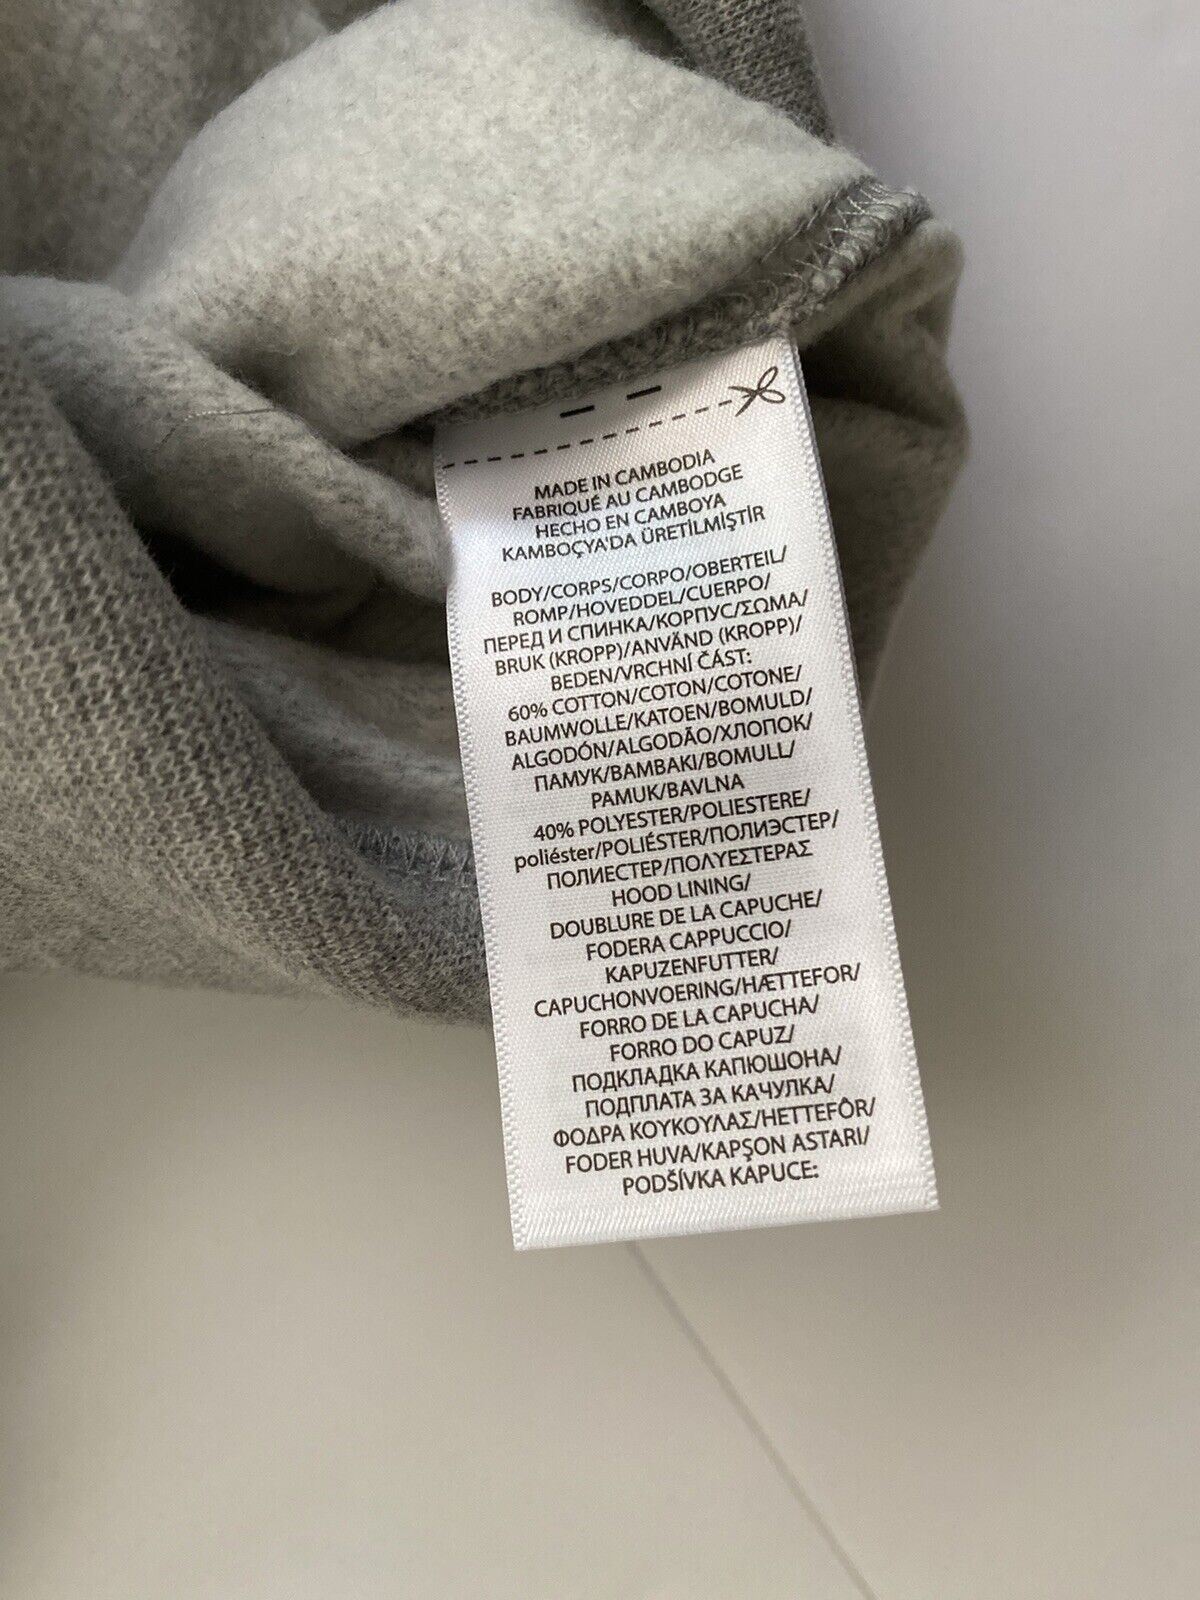 Neu mit Etikett: 198 $ Polo Ralph Lauren USA Logo Langarm-Fleece-Kapuzenpullover, Grau, Größe S 